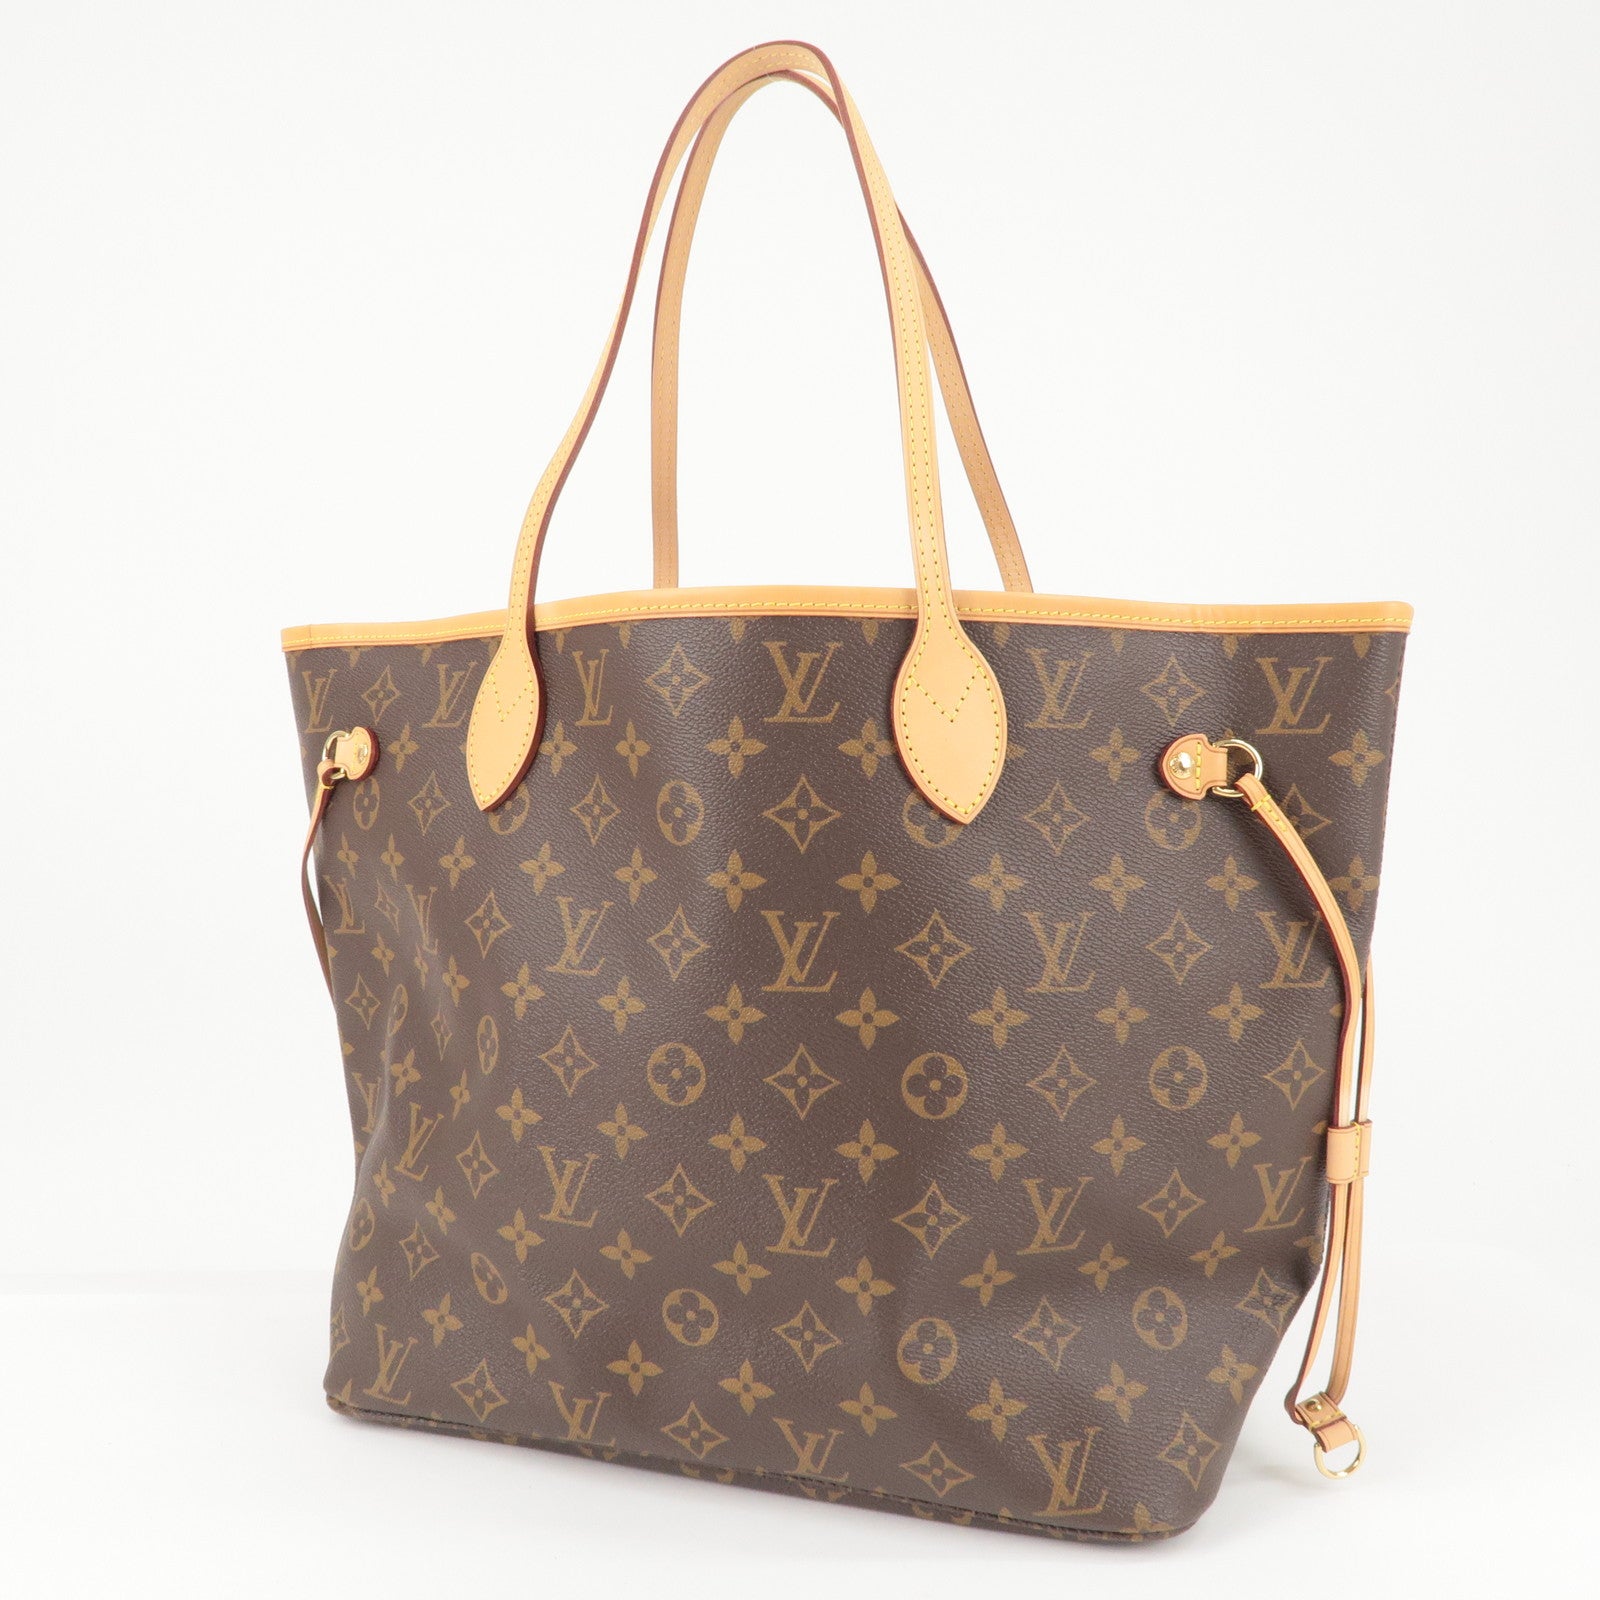 Gorgeous Authentic Louis Vuitton Monogram Neverfull MM Tote Bag